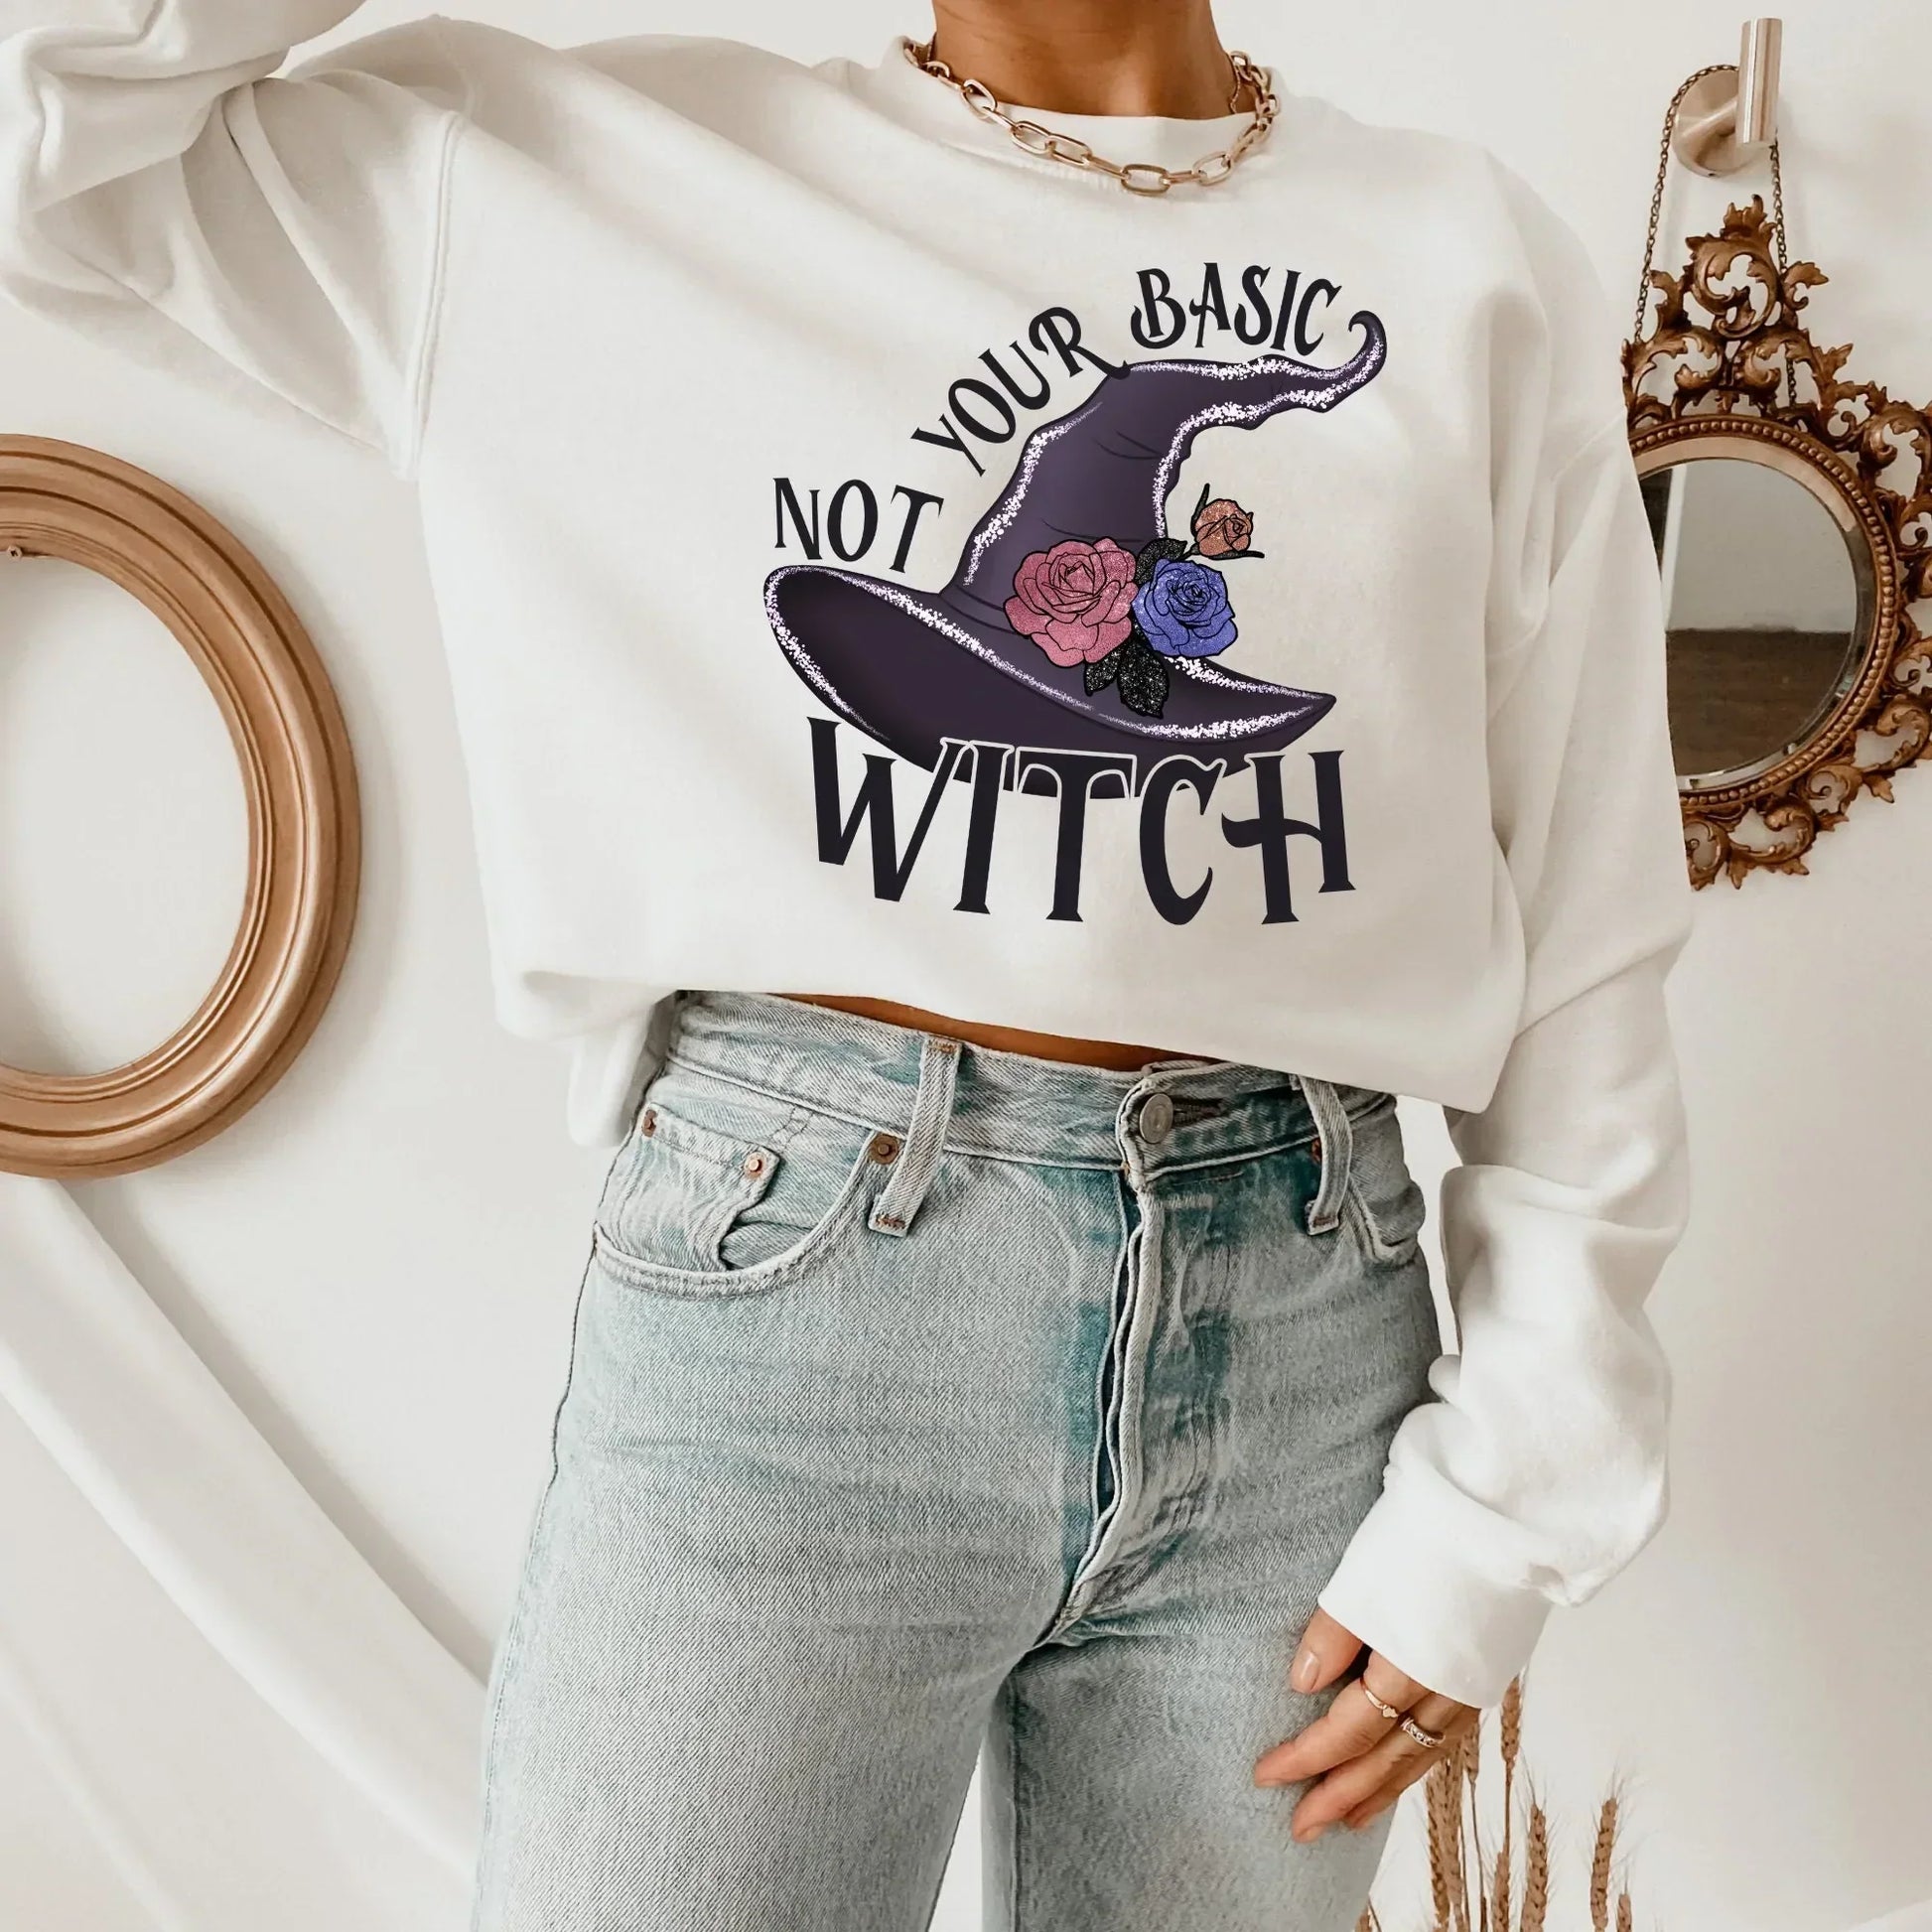 Witchy Vibes Shirt, Pastel Halloween Sweatshirt, Witch Hat Shirt, Magical Witch Shirt, Pastel Goth Style, Halloween Shirt,Witchy Woman Shirt